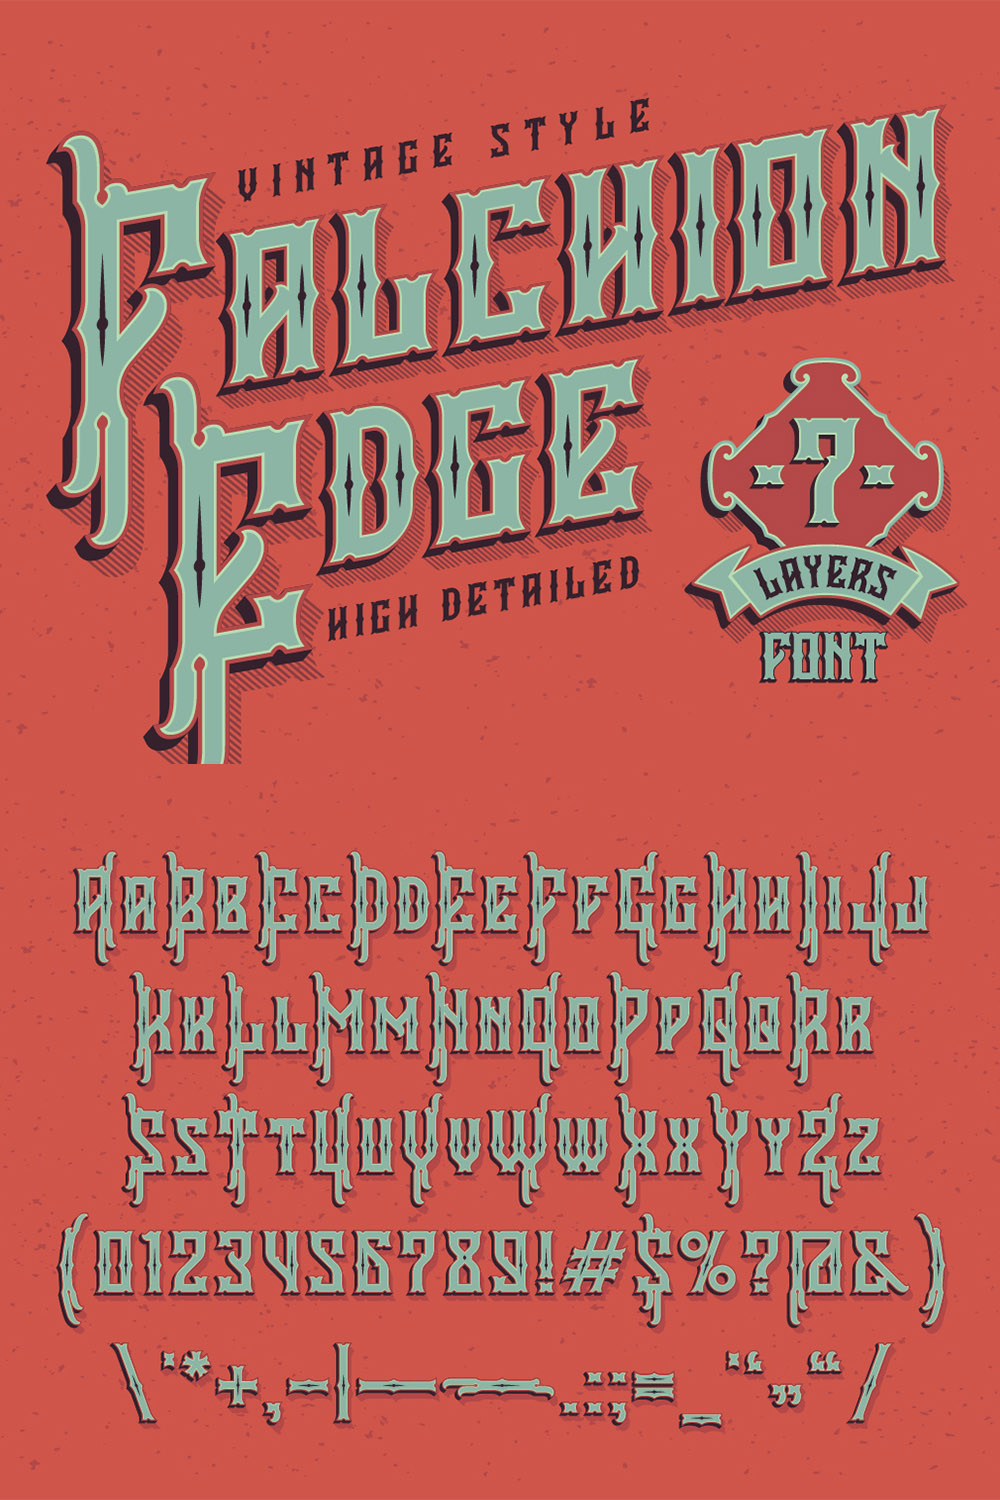 Image with text showcasing the fabulous Falchion Edge font.